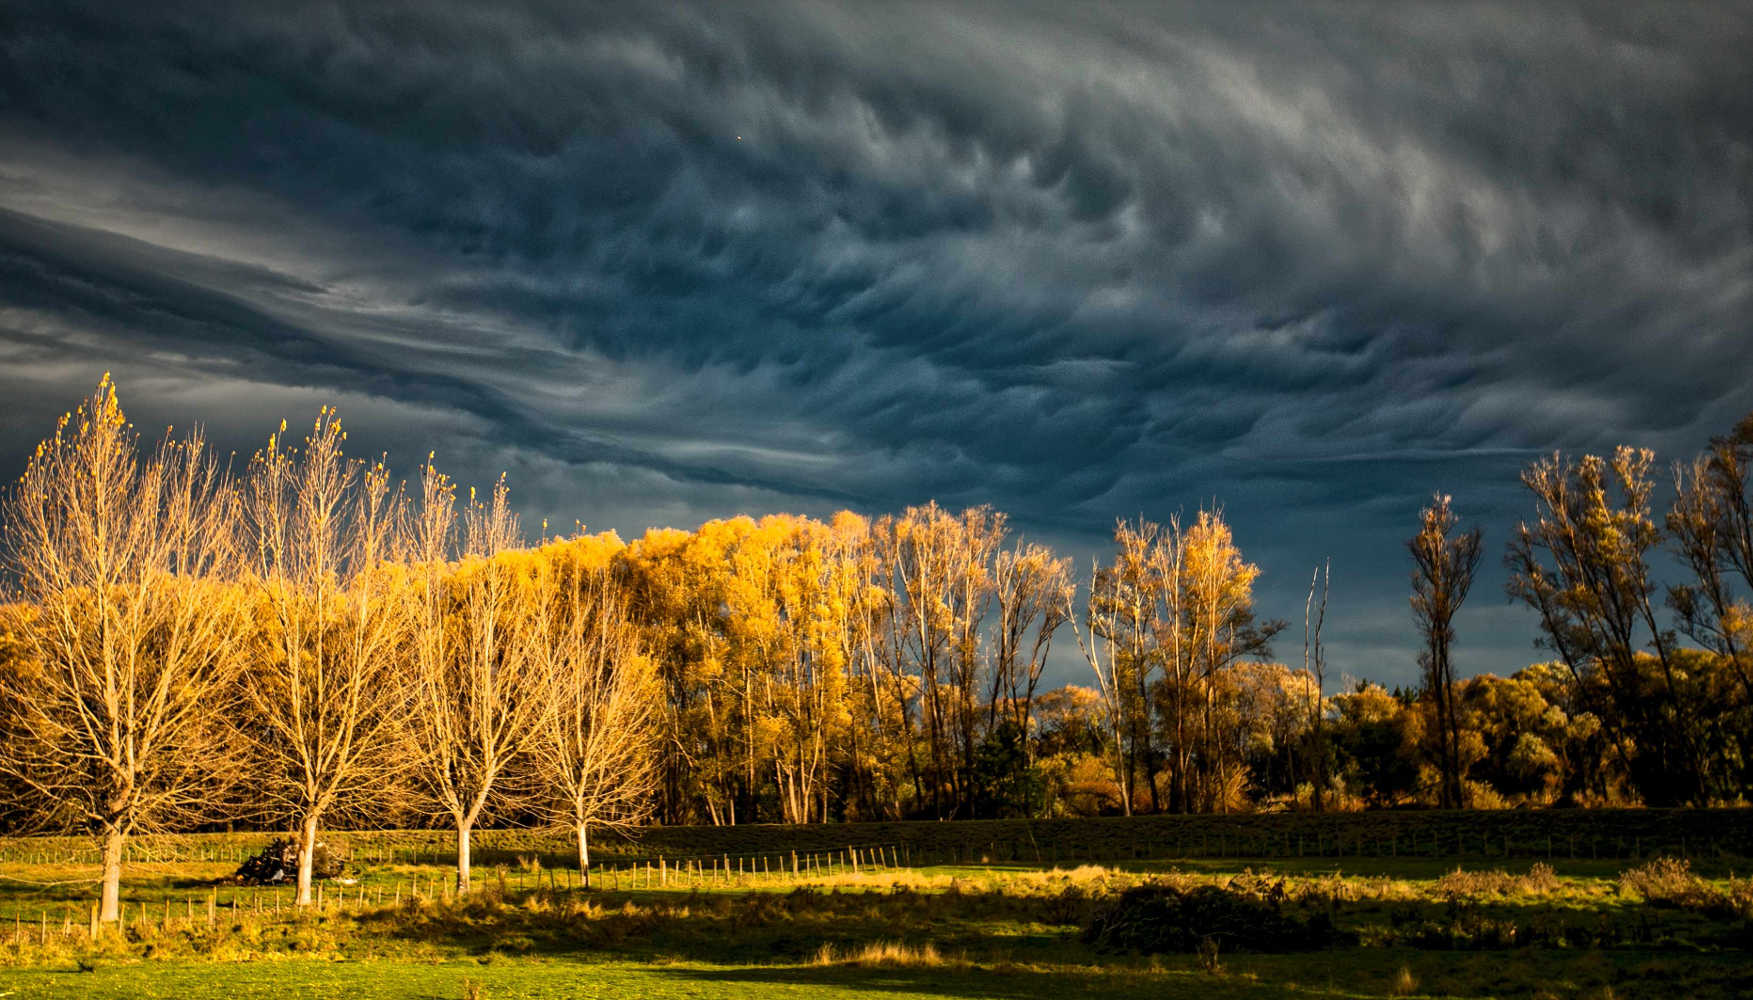 Storm sky with dramatic lighting in Waipawa, Hawkes Bay, New Zealand